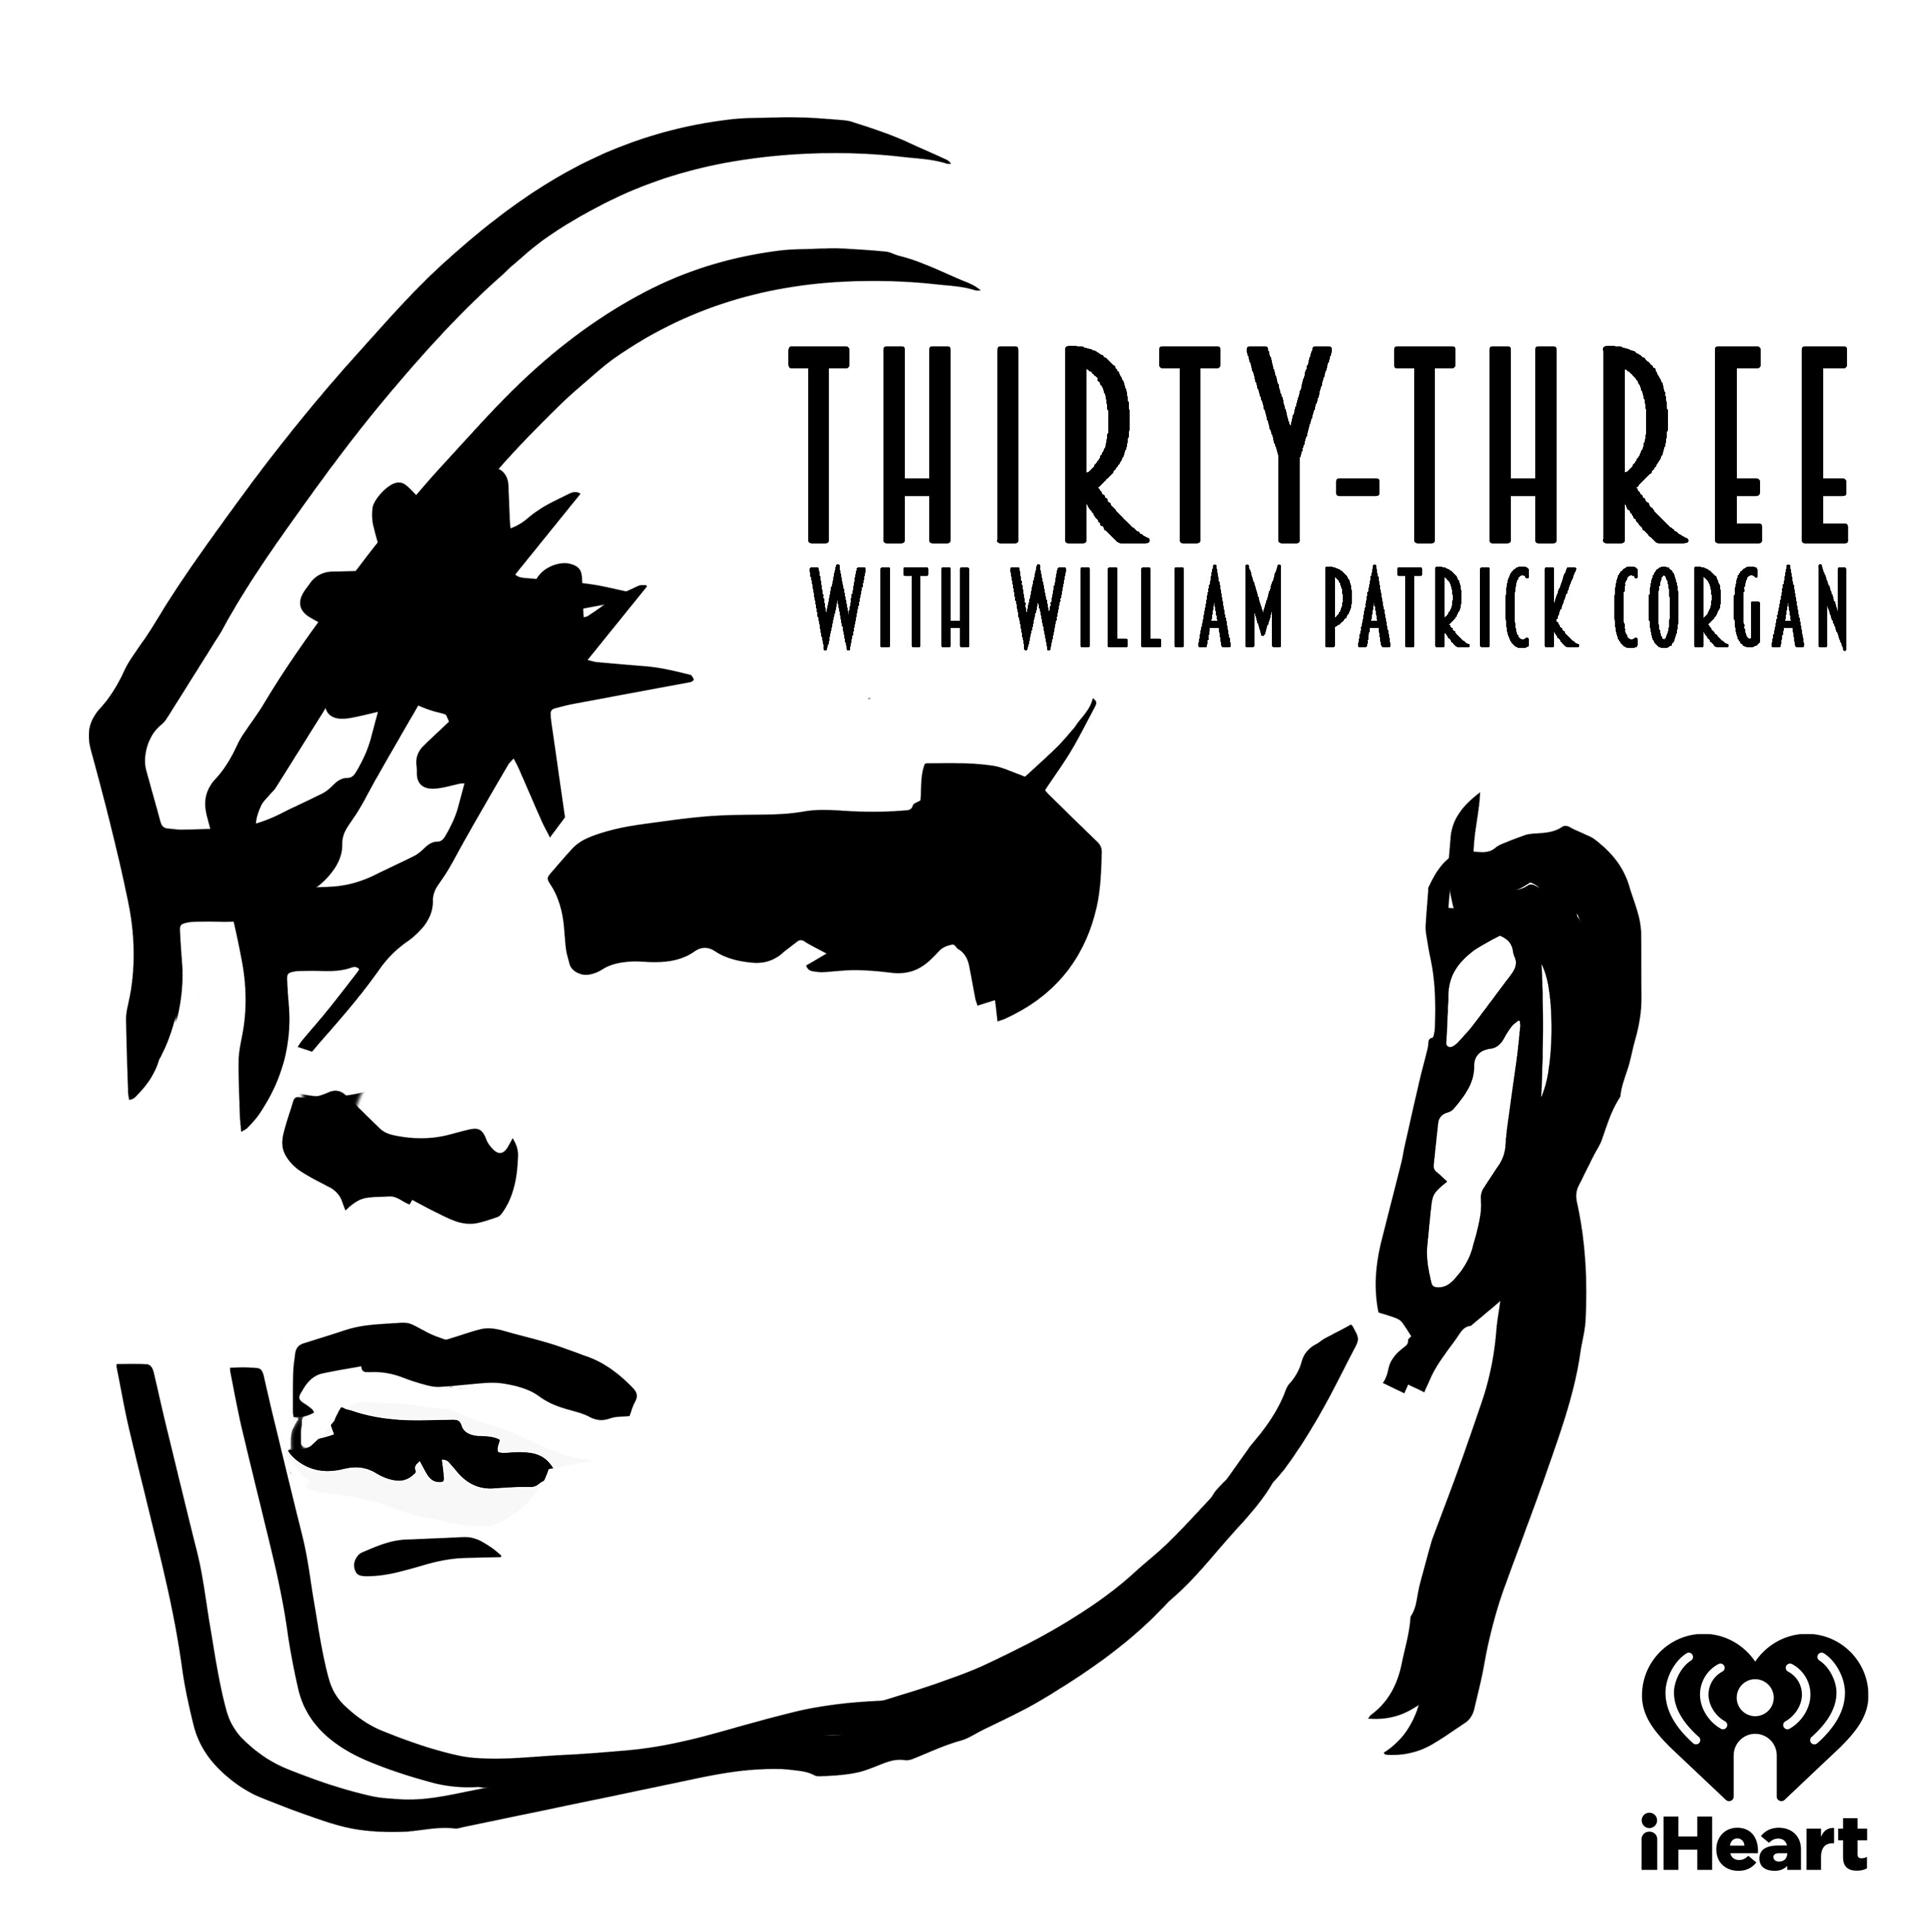 Introducing: Thirty-Three with William Patrick Corgan